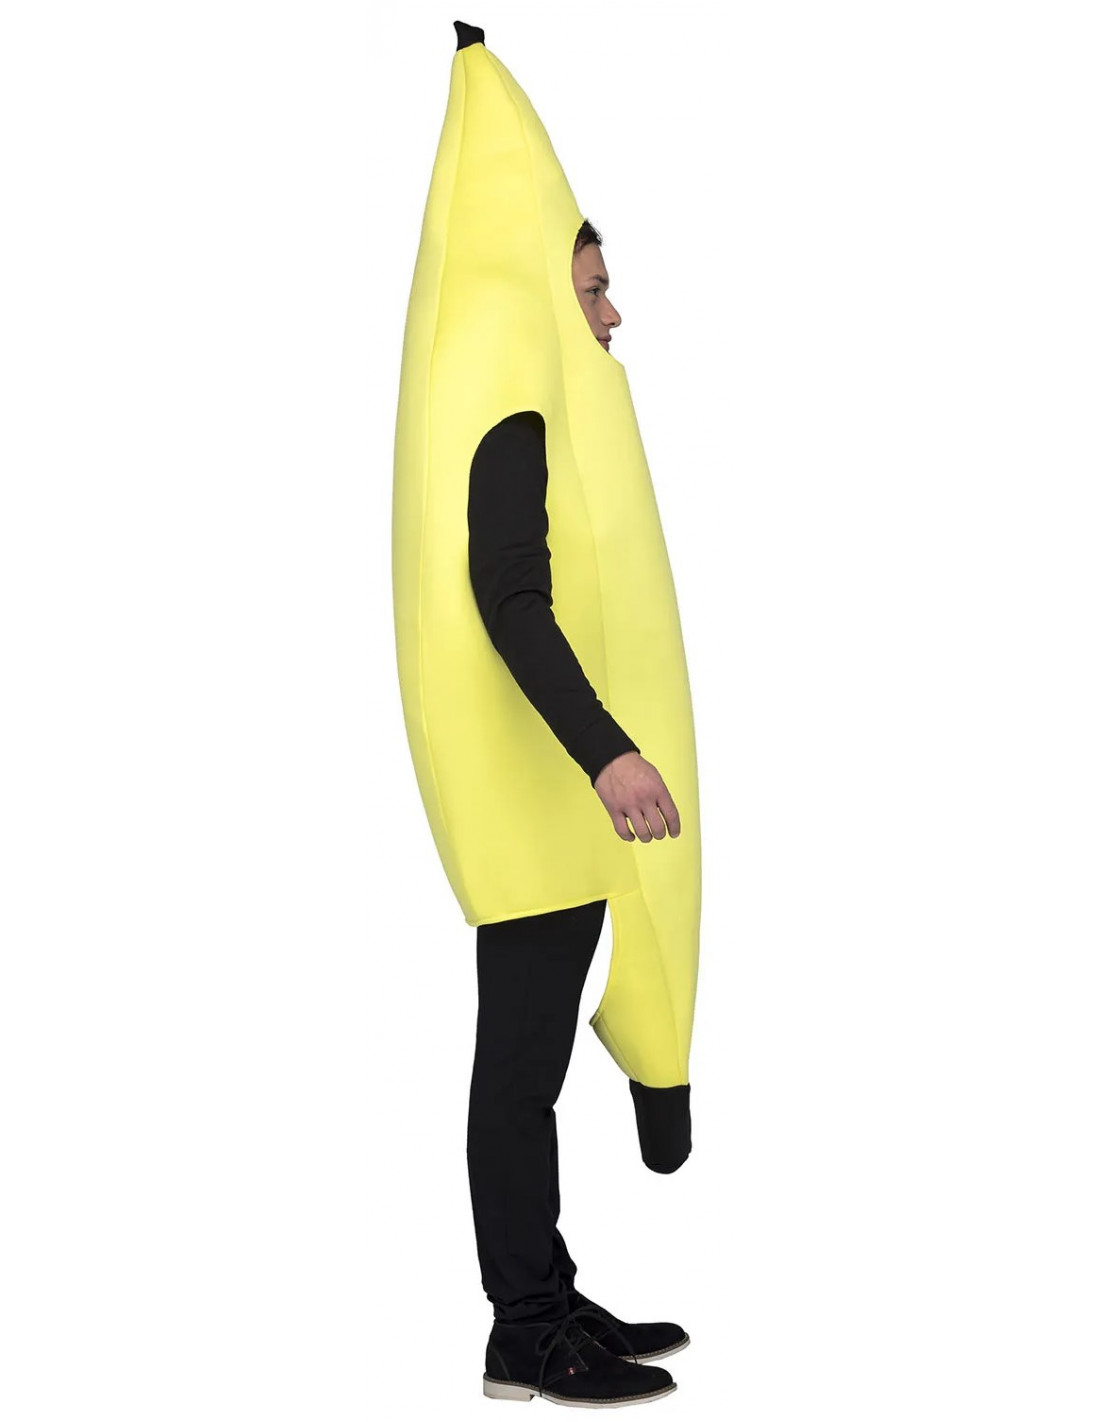 Disfraz Platano Disfraces Halloween Adult Cosplay De Banana